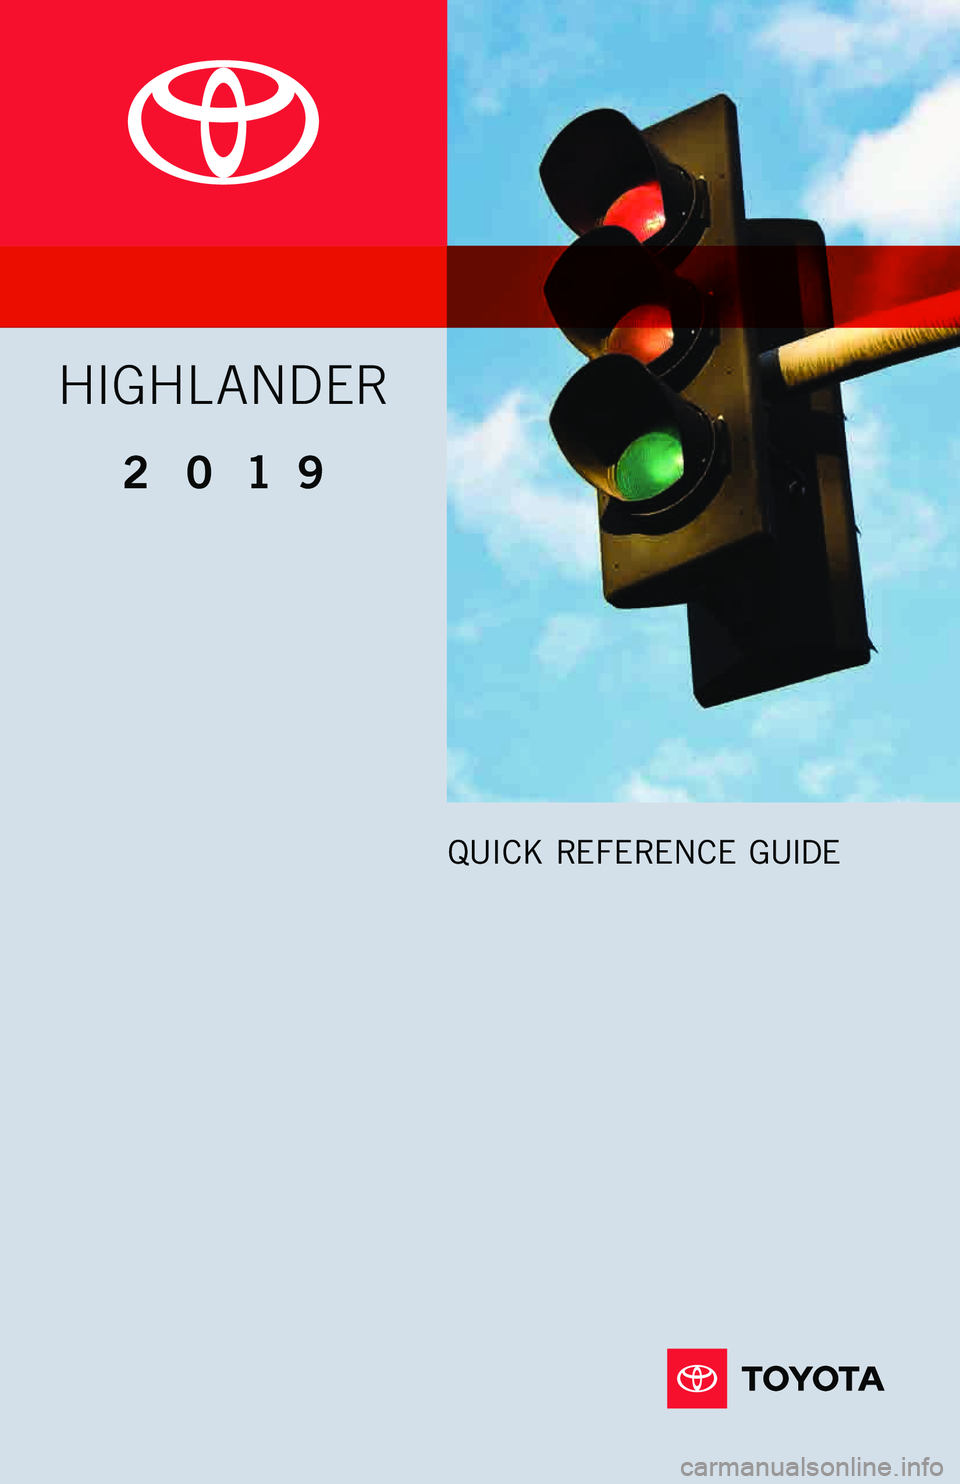 TOYOTA HIGHLANDER 2019  Owners Manual (in English) 2019
QUICK  REFERENCE  GUIDE
HIGHLANDER
 114709_A_18-MKG-12086_QRG_Highlander_COVER.indd   28/7/18   9:46 PM   